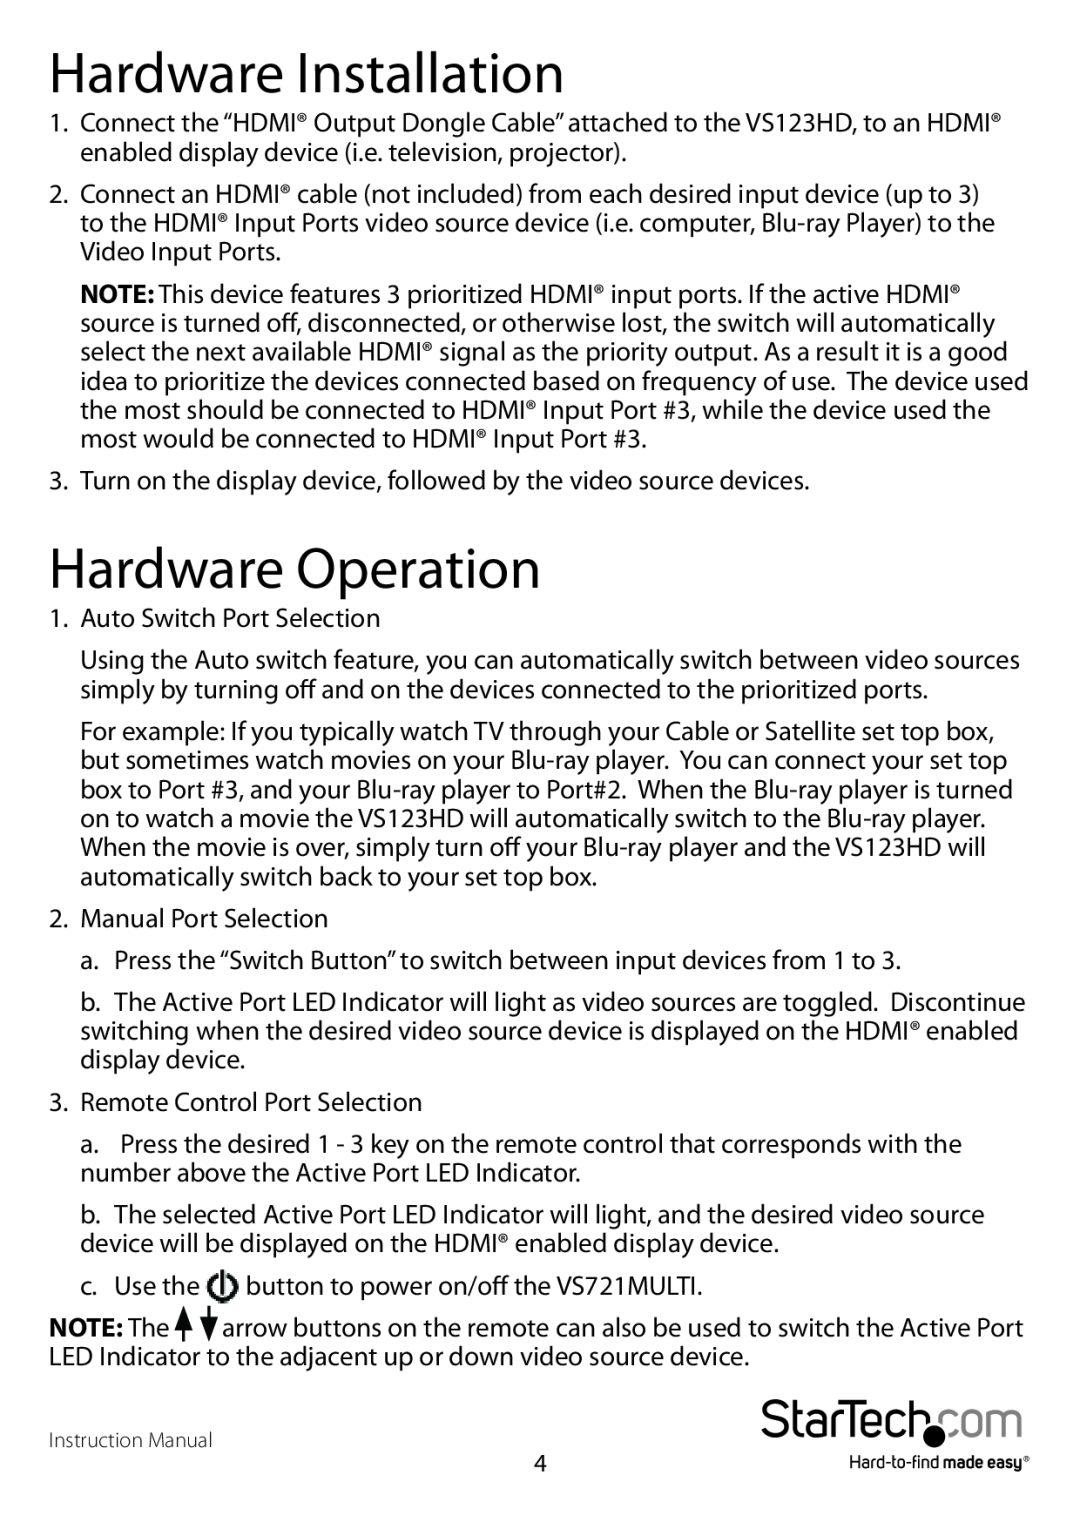 StarTech.com vs123HD manual Hardware Installation, Hardware Operation 